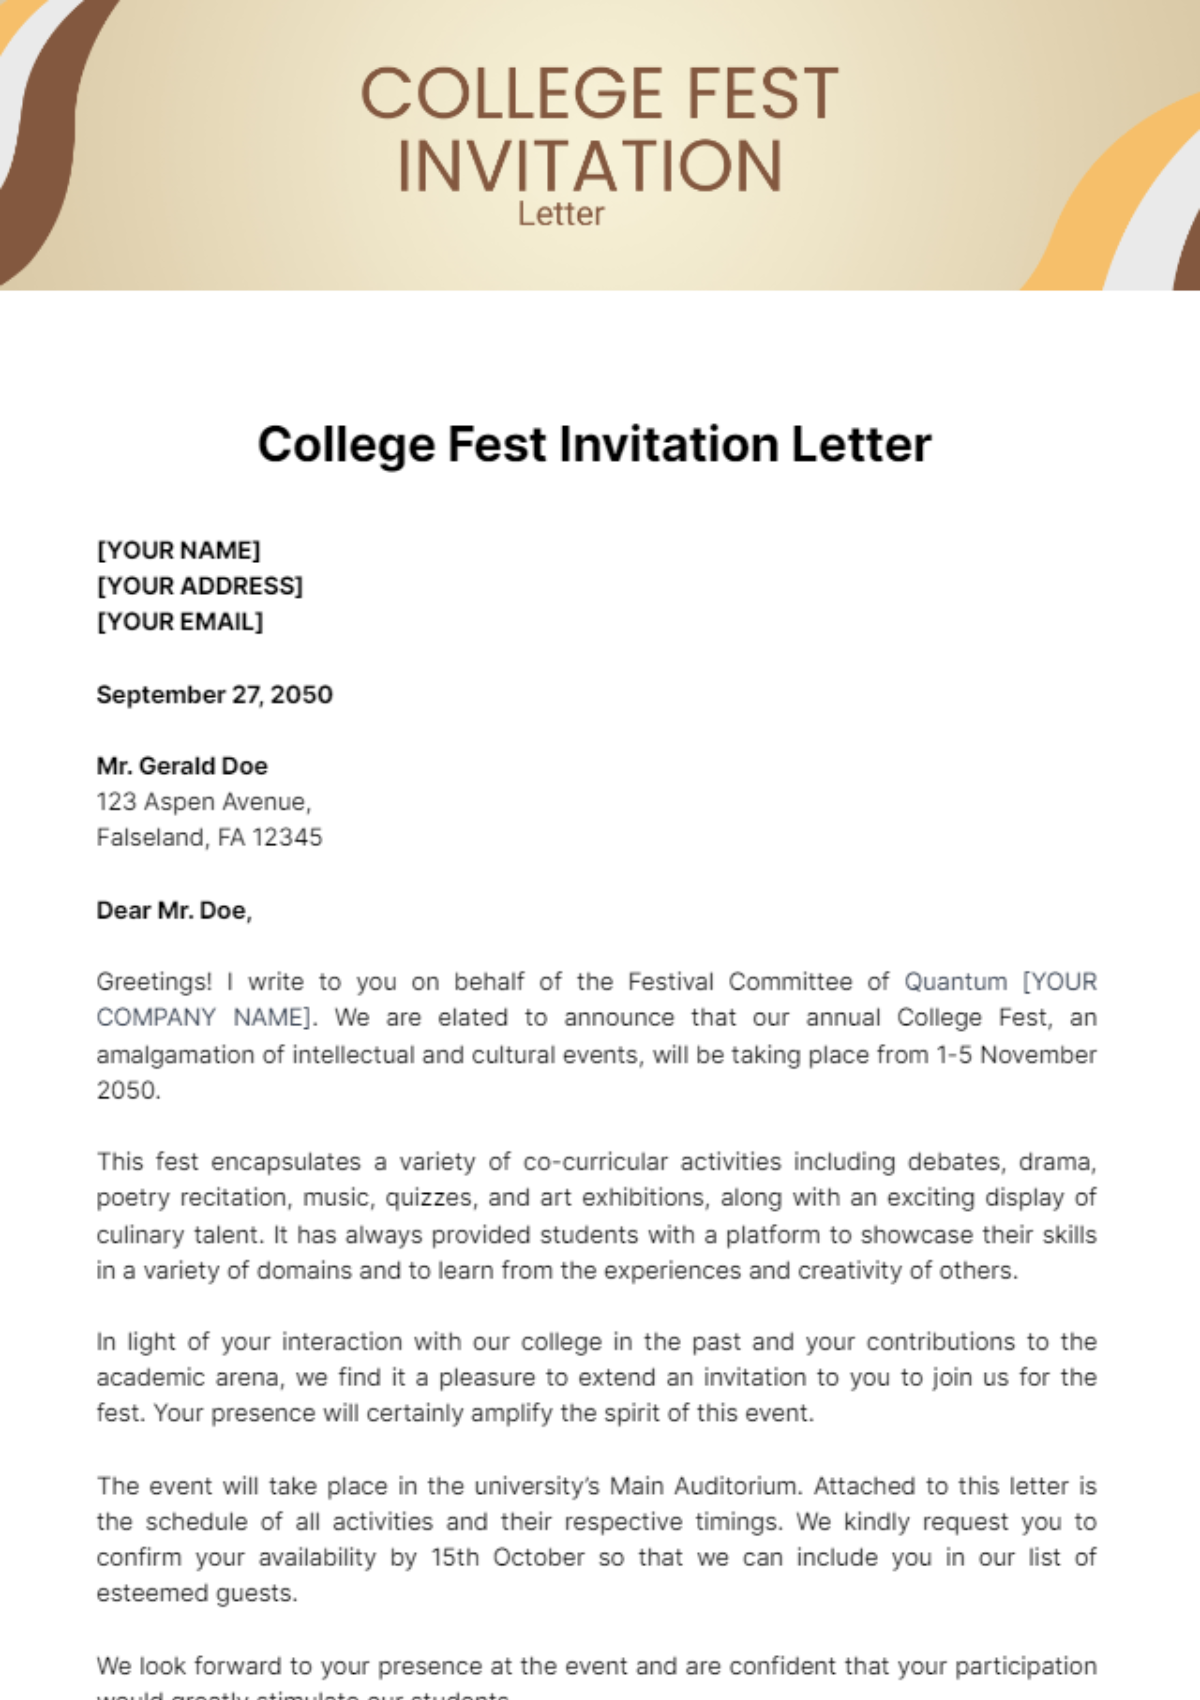 Free College Fest Invitation Letter Template